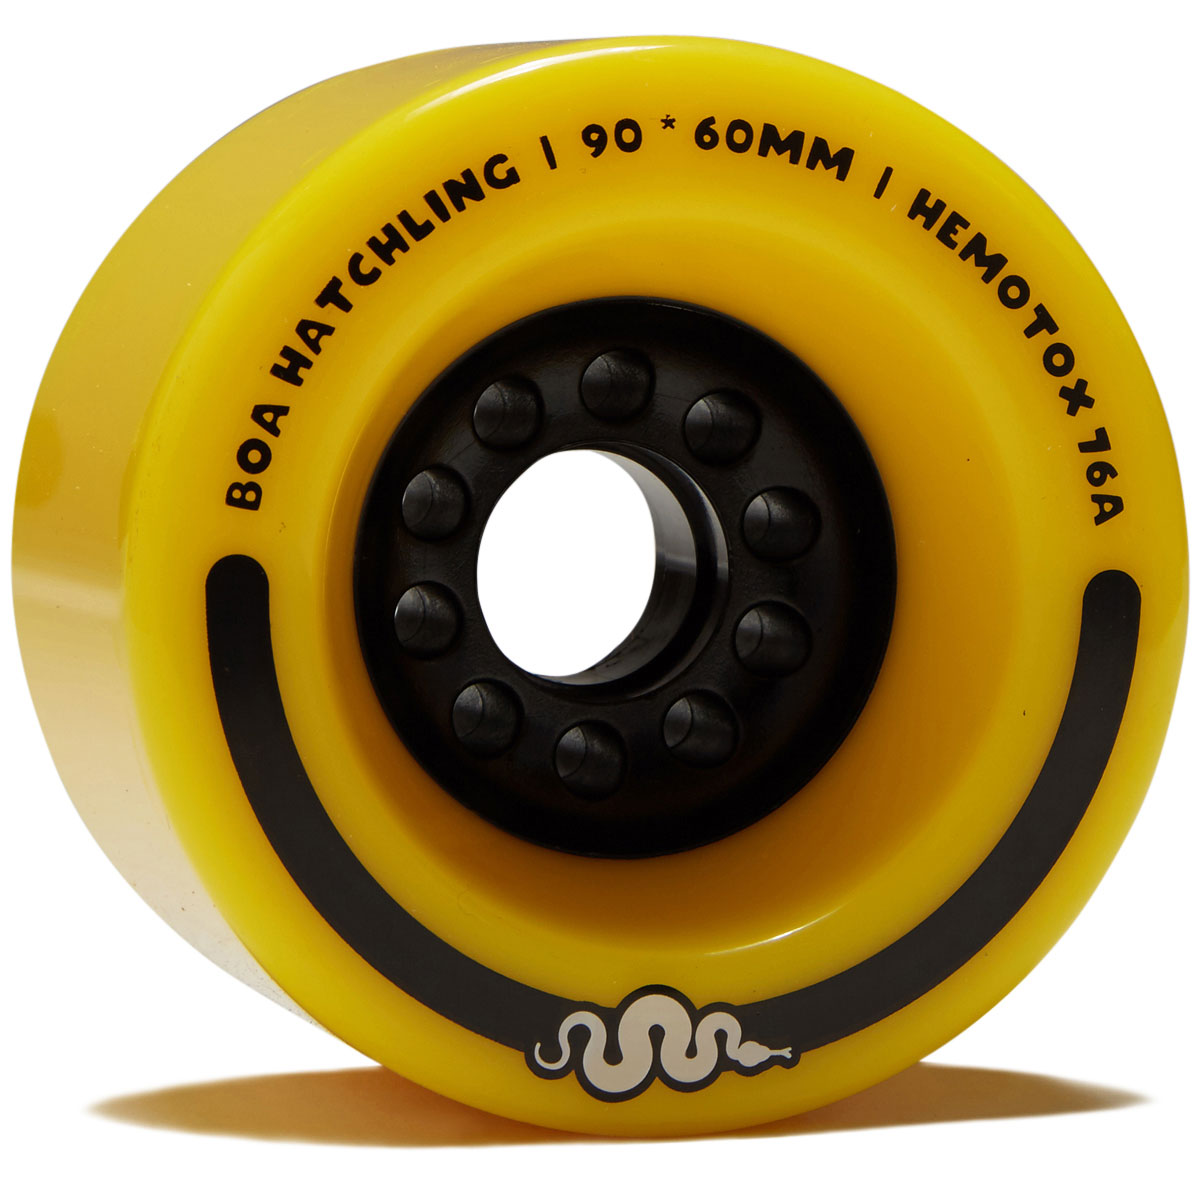 Boa Hatchling V2 76a Longboard Wheels - Yellow - 90mm image 1